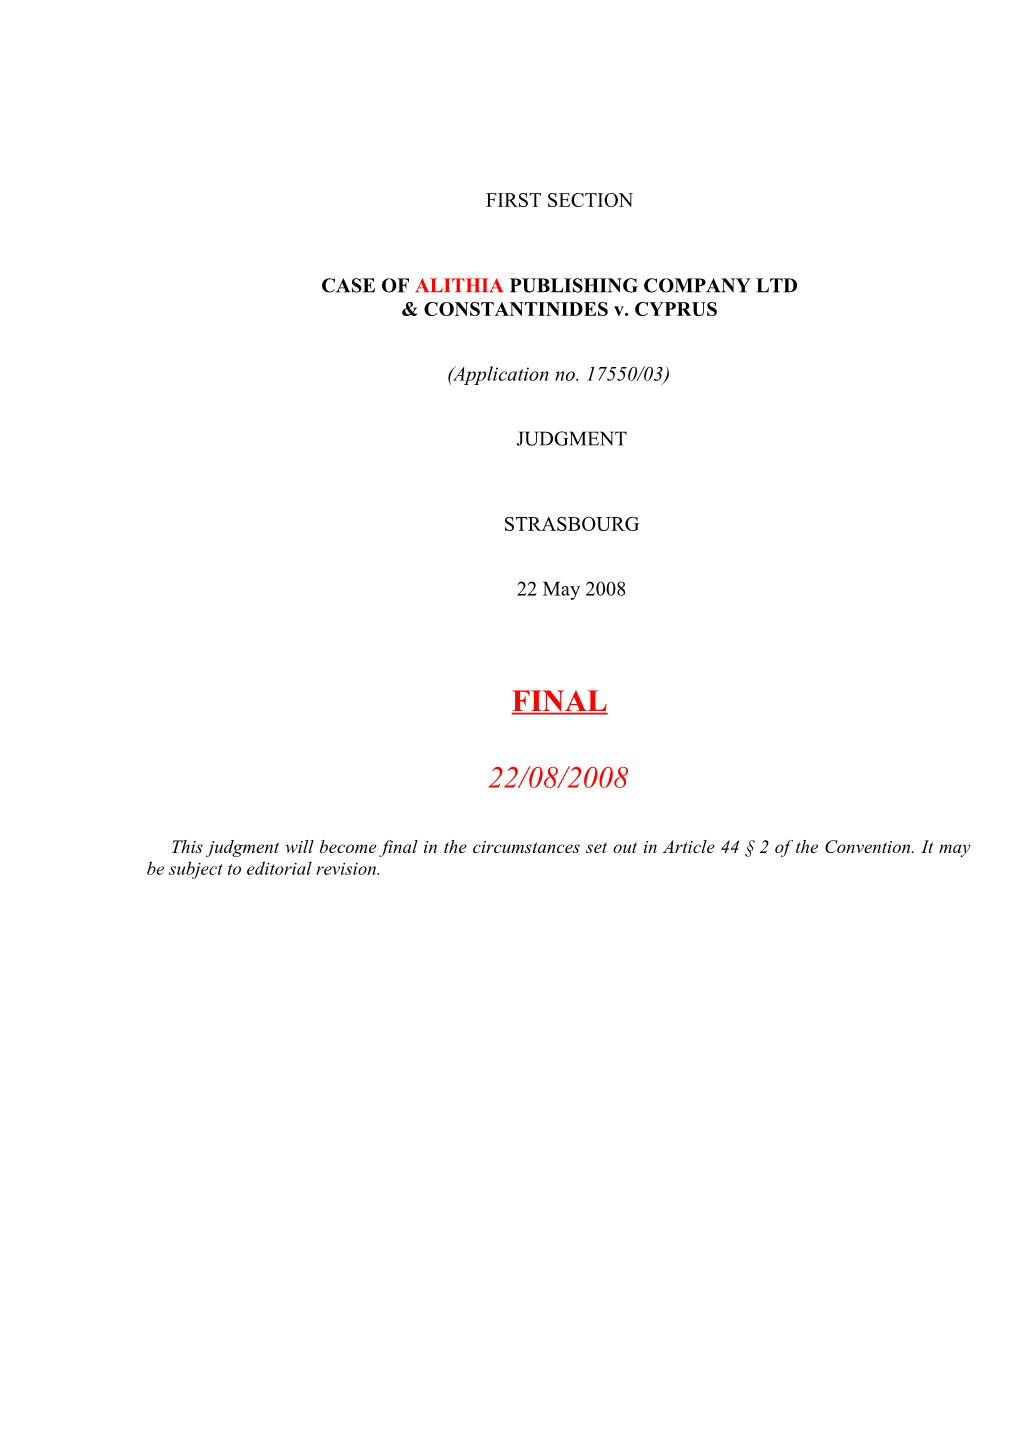 Case of Alithia Publishing Company Ltd